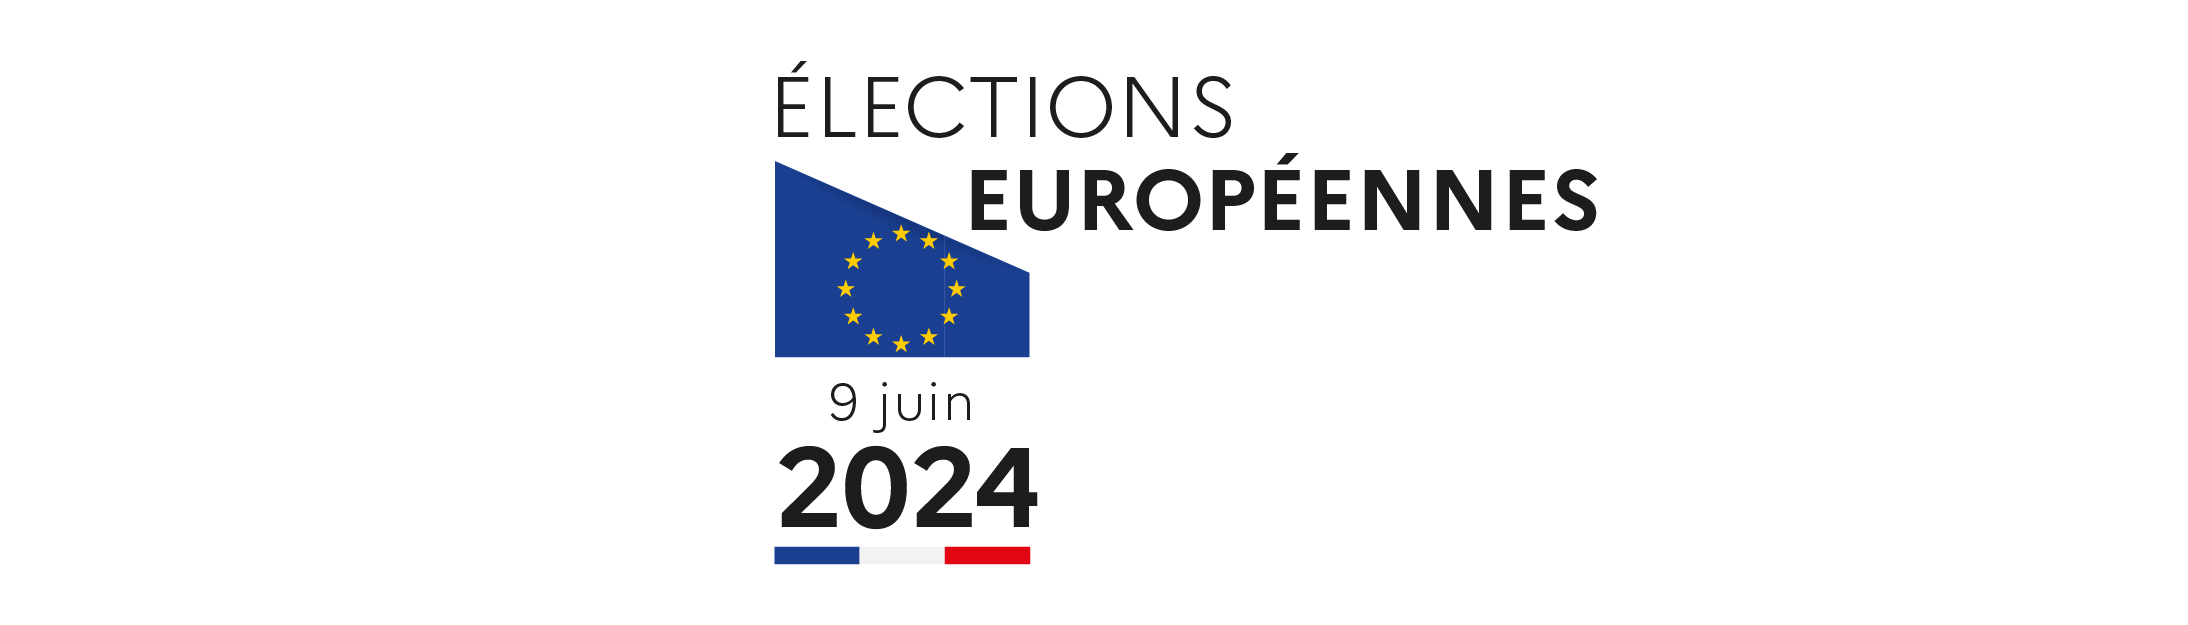 Election_Europennes-2024.jpg